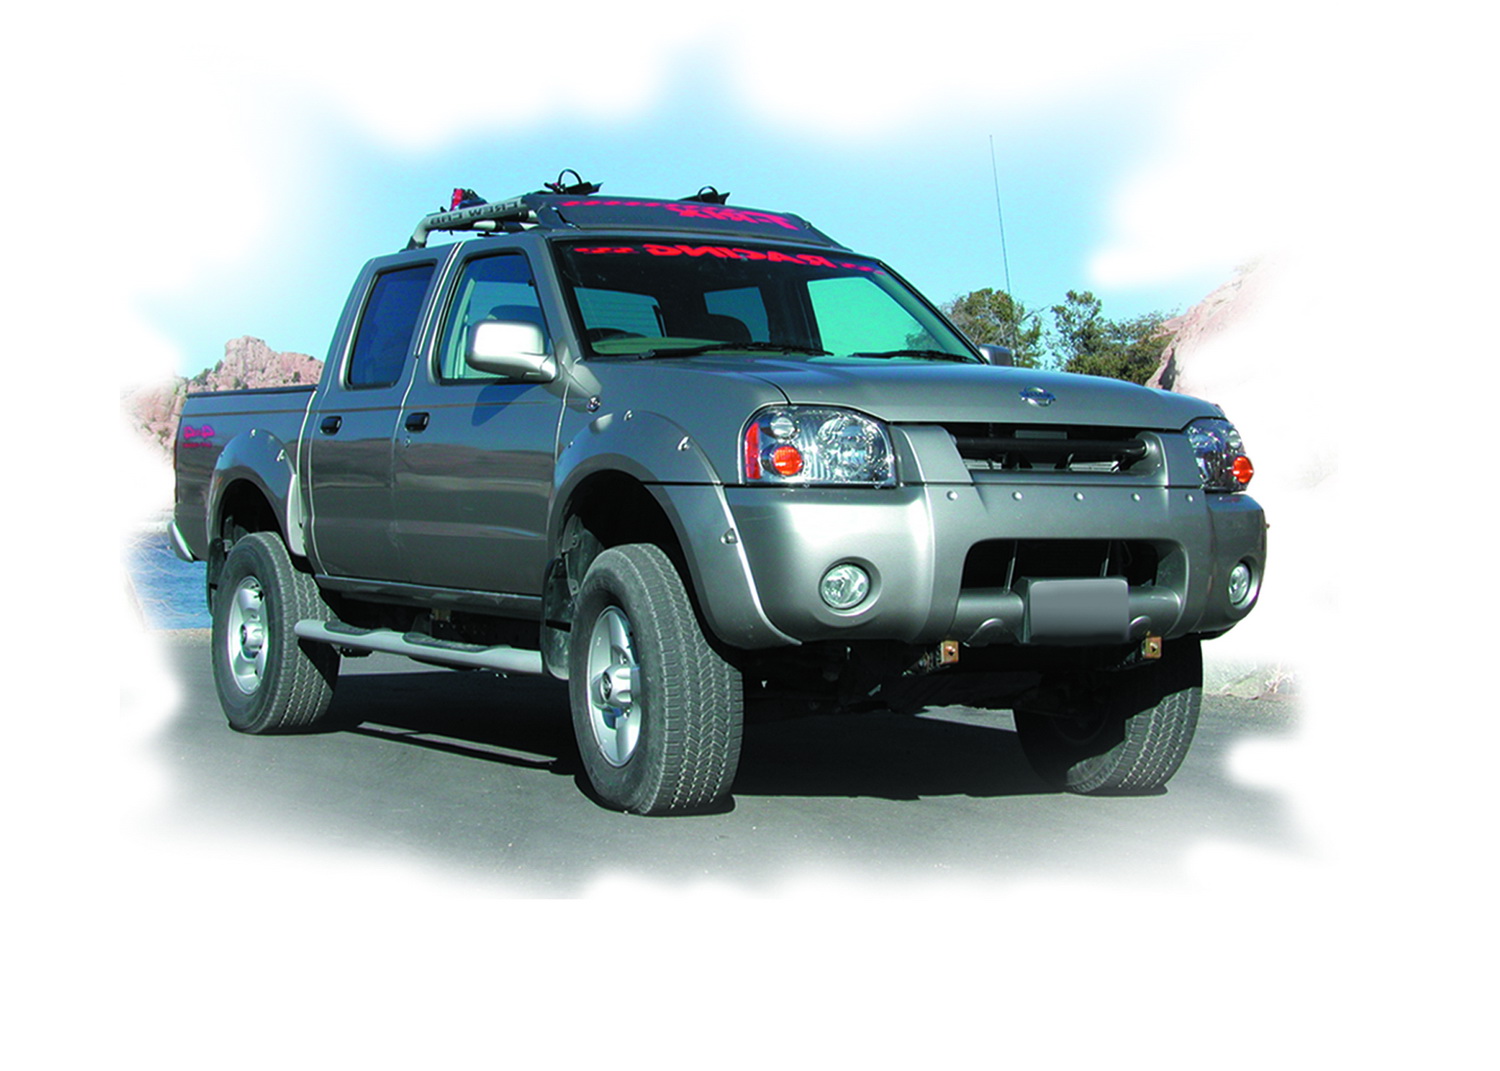 2005 Nissan frontier body lift #8